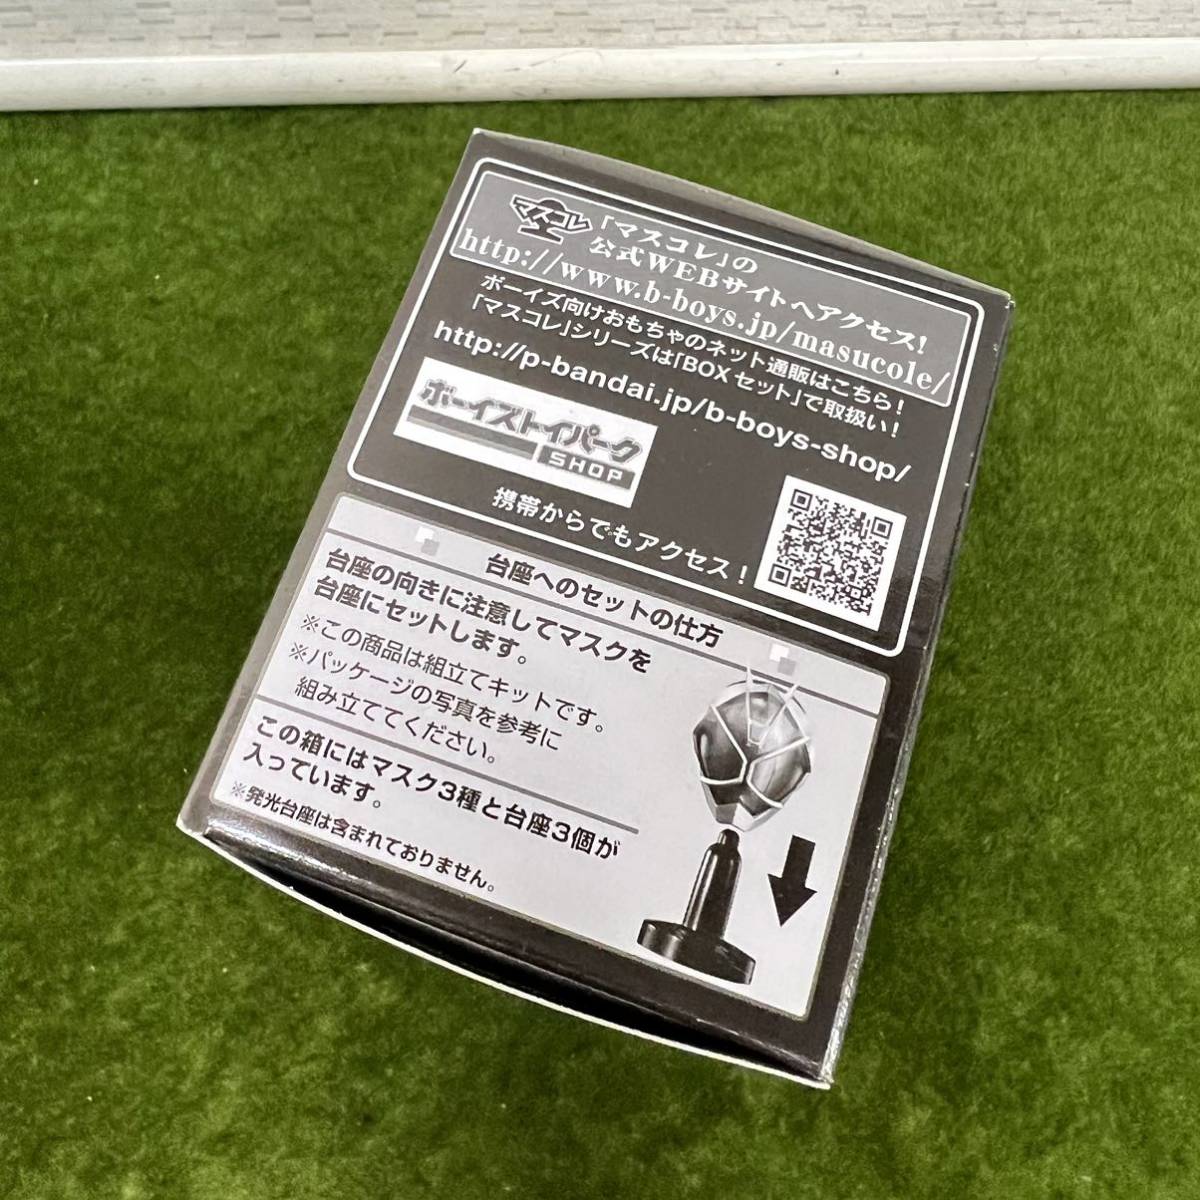 A** новый товар нераспечатанный товар /BANDAI/ Bandai форель kore premium Kamen Rider Wizard / Kamen Rider Wizard комплект ..! кольцо. Mahou Tsukai 